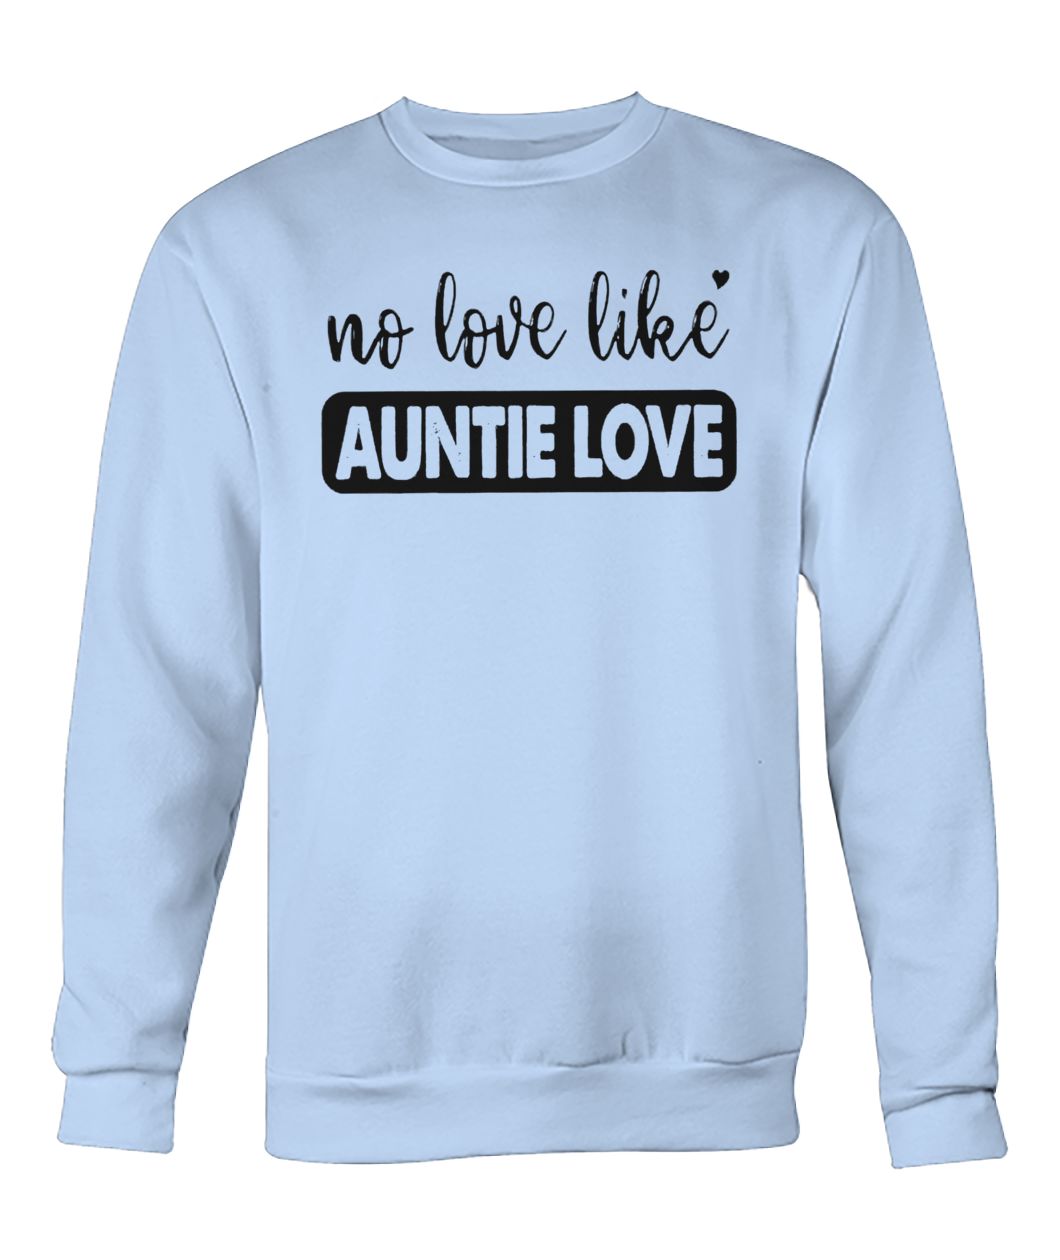 No love like auntie love crew neck sweatshirt